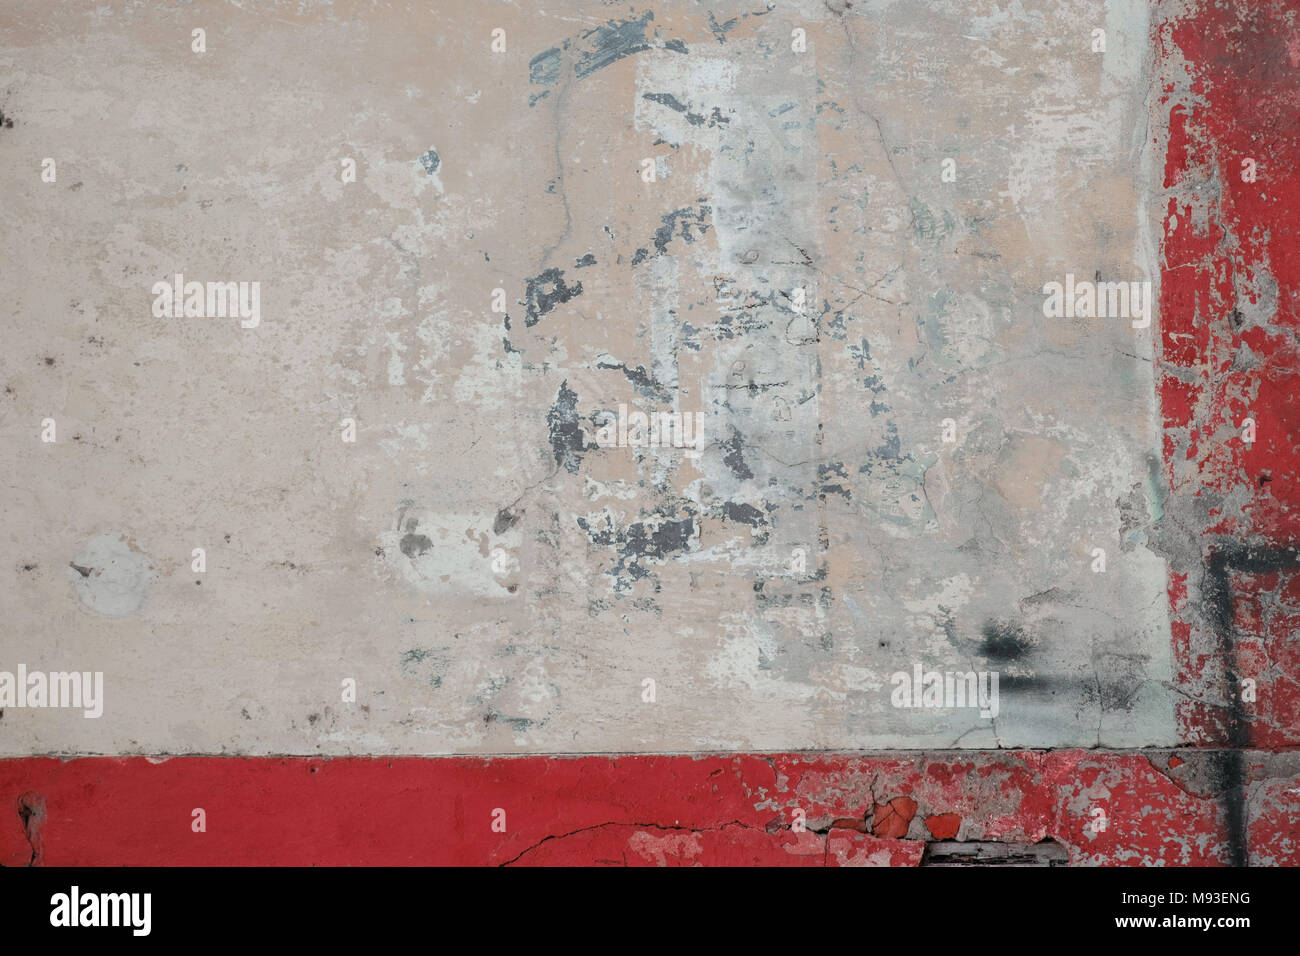 Jahrgang grafik hintergrund - alte Beton wand Textur - Stockfoto